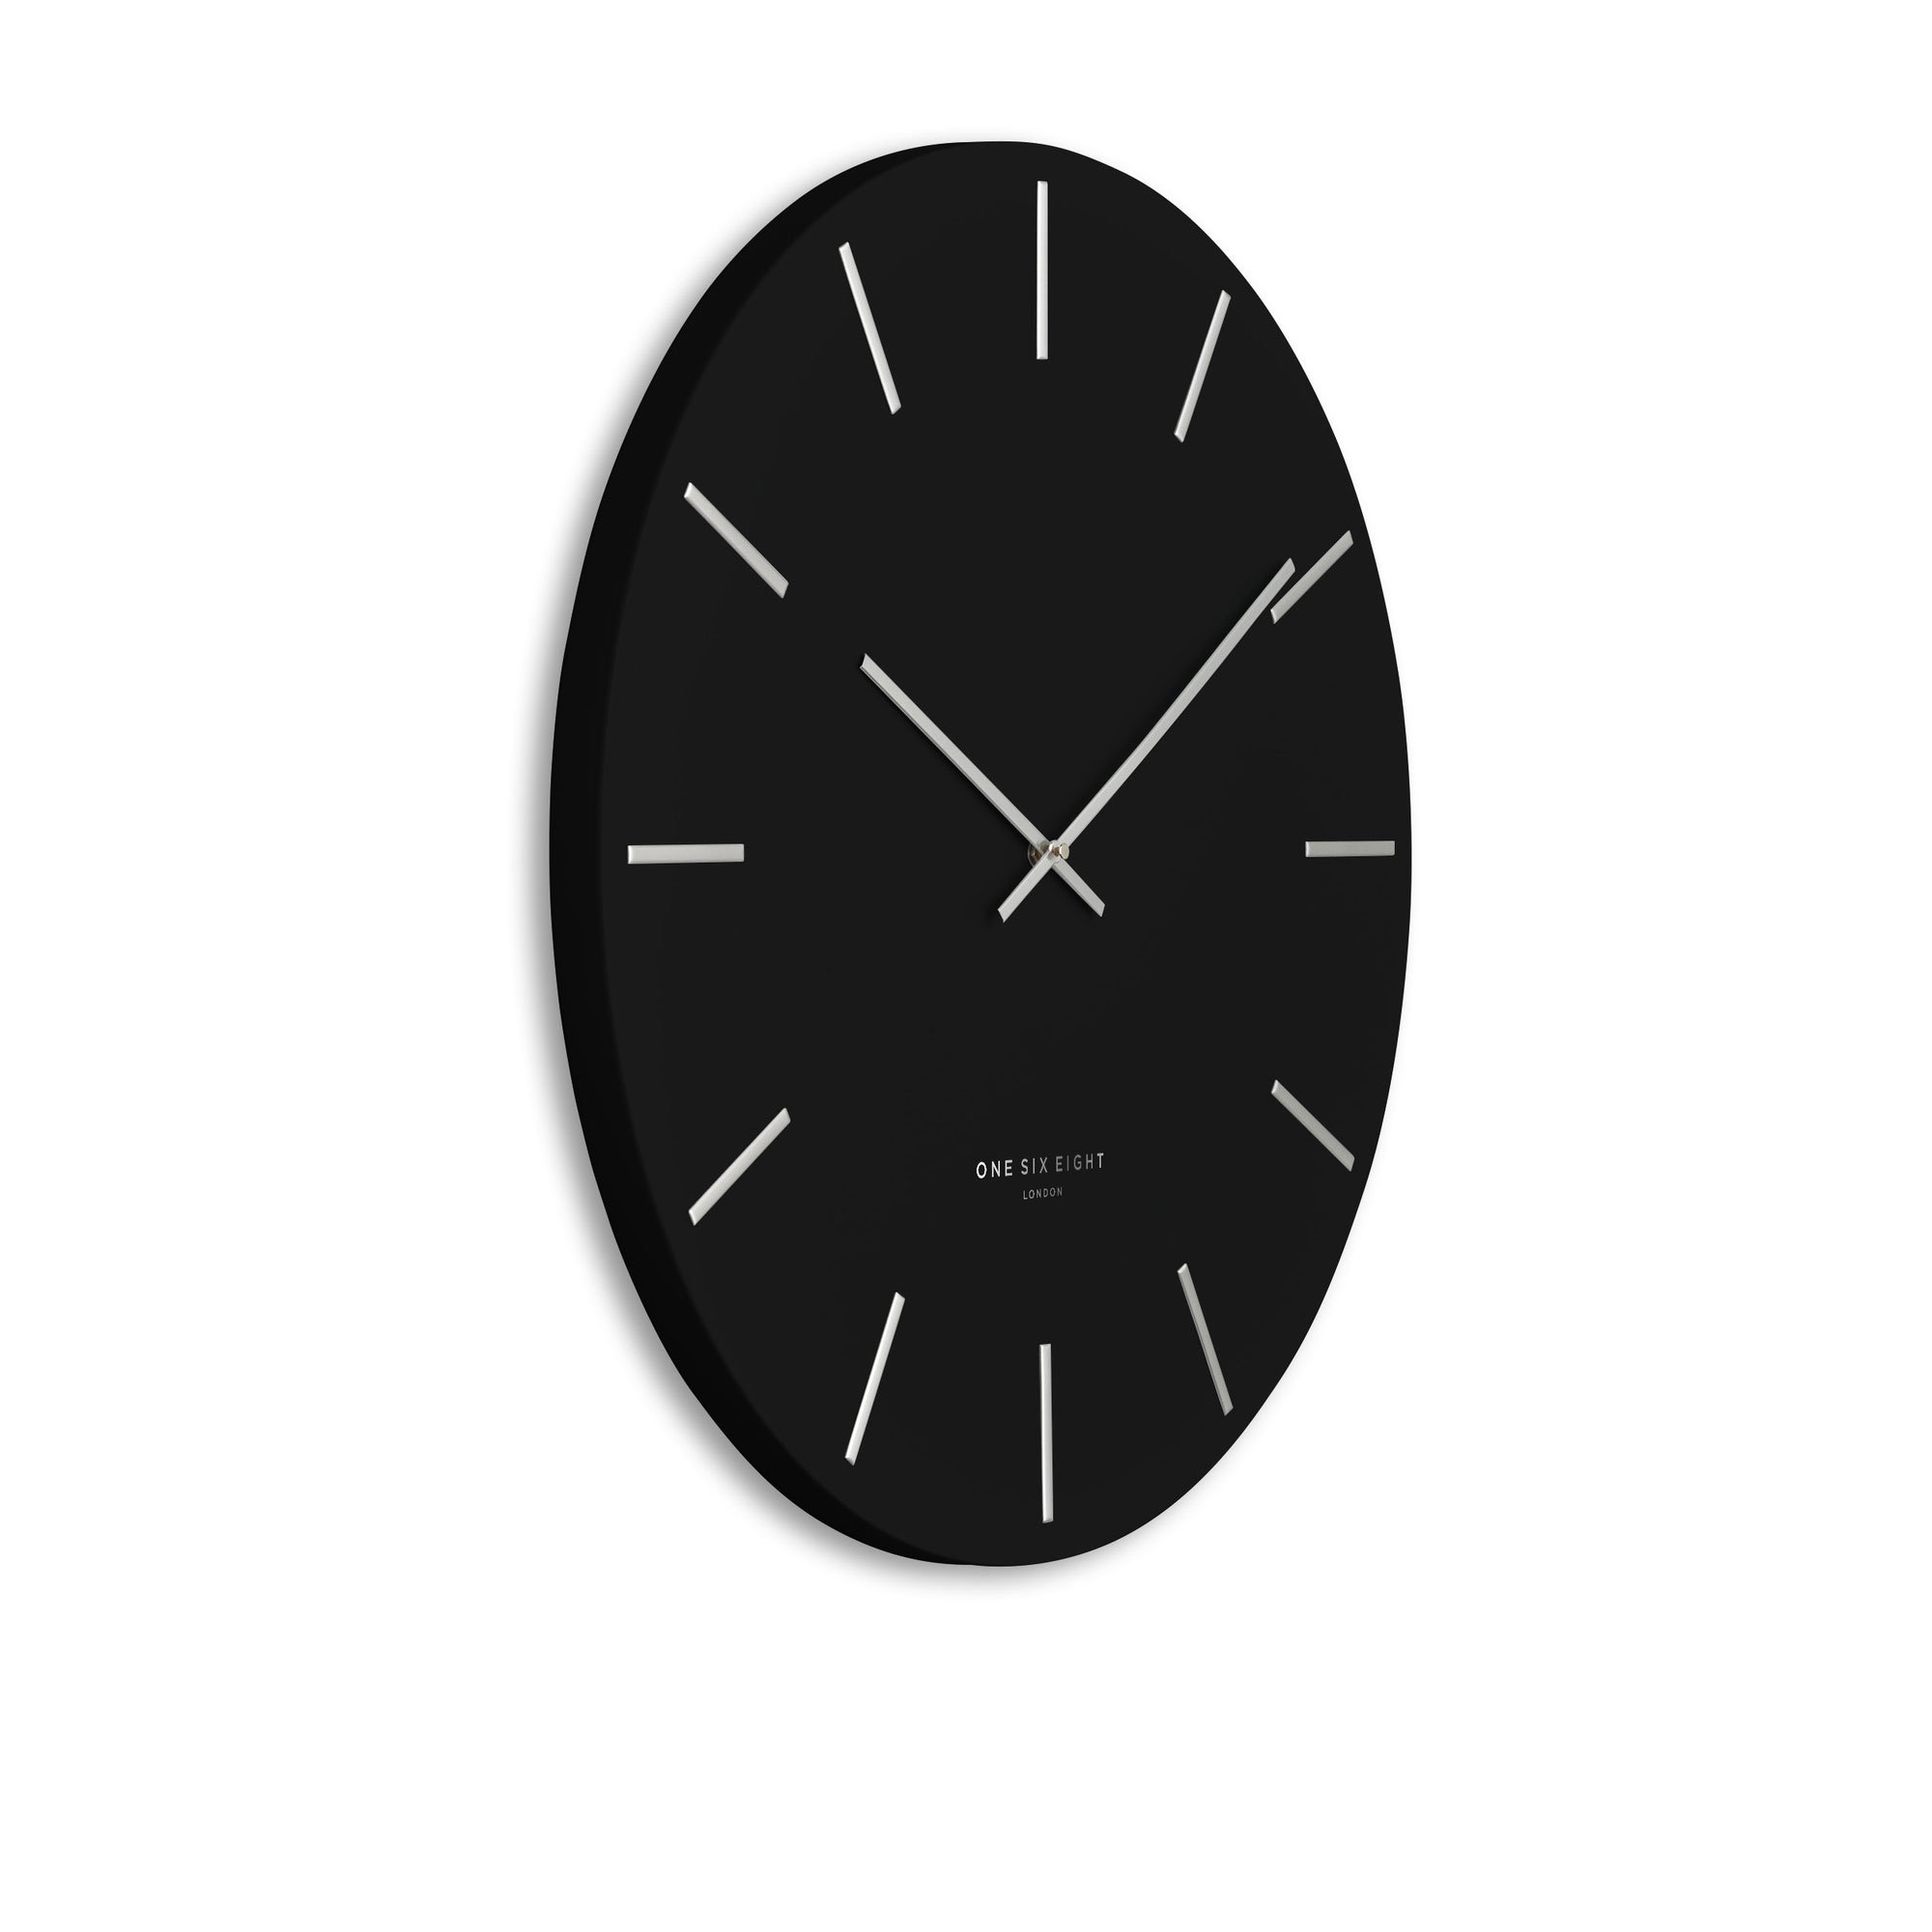 One Six Eight London Luca Silent Wall Clock 60cm Black Image 2